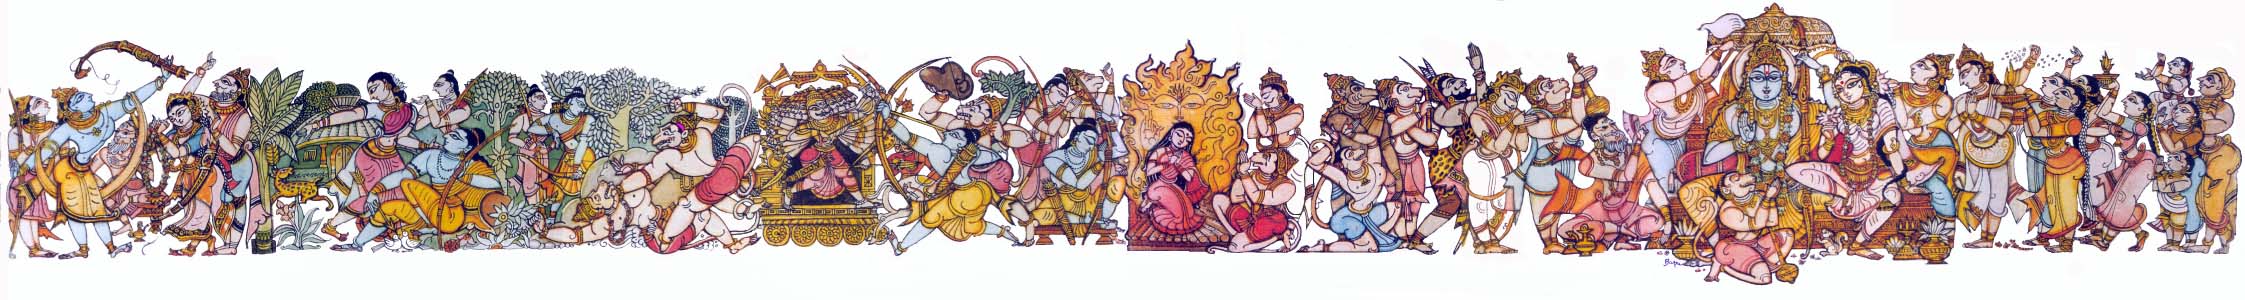 Ramayana Painting by Bapu